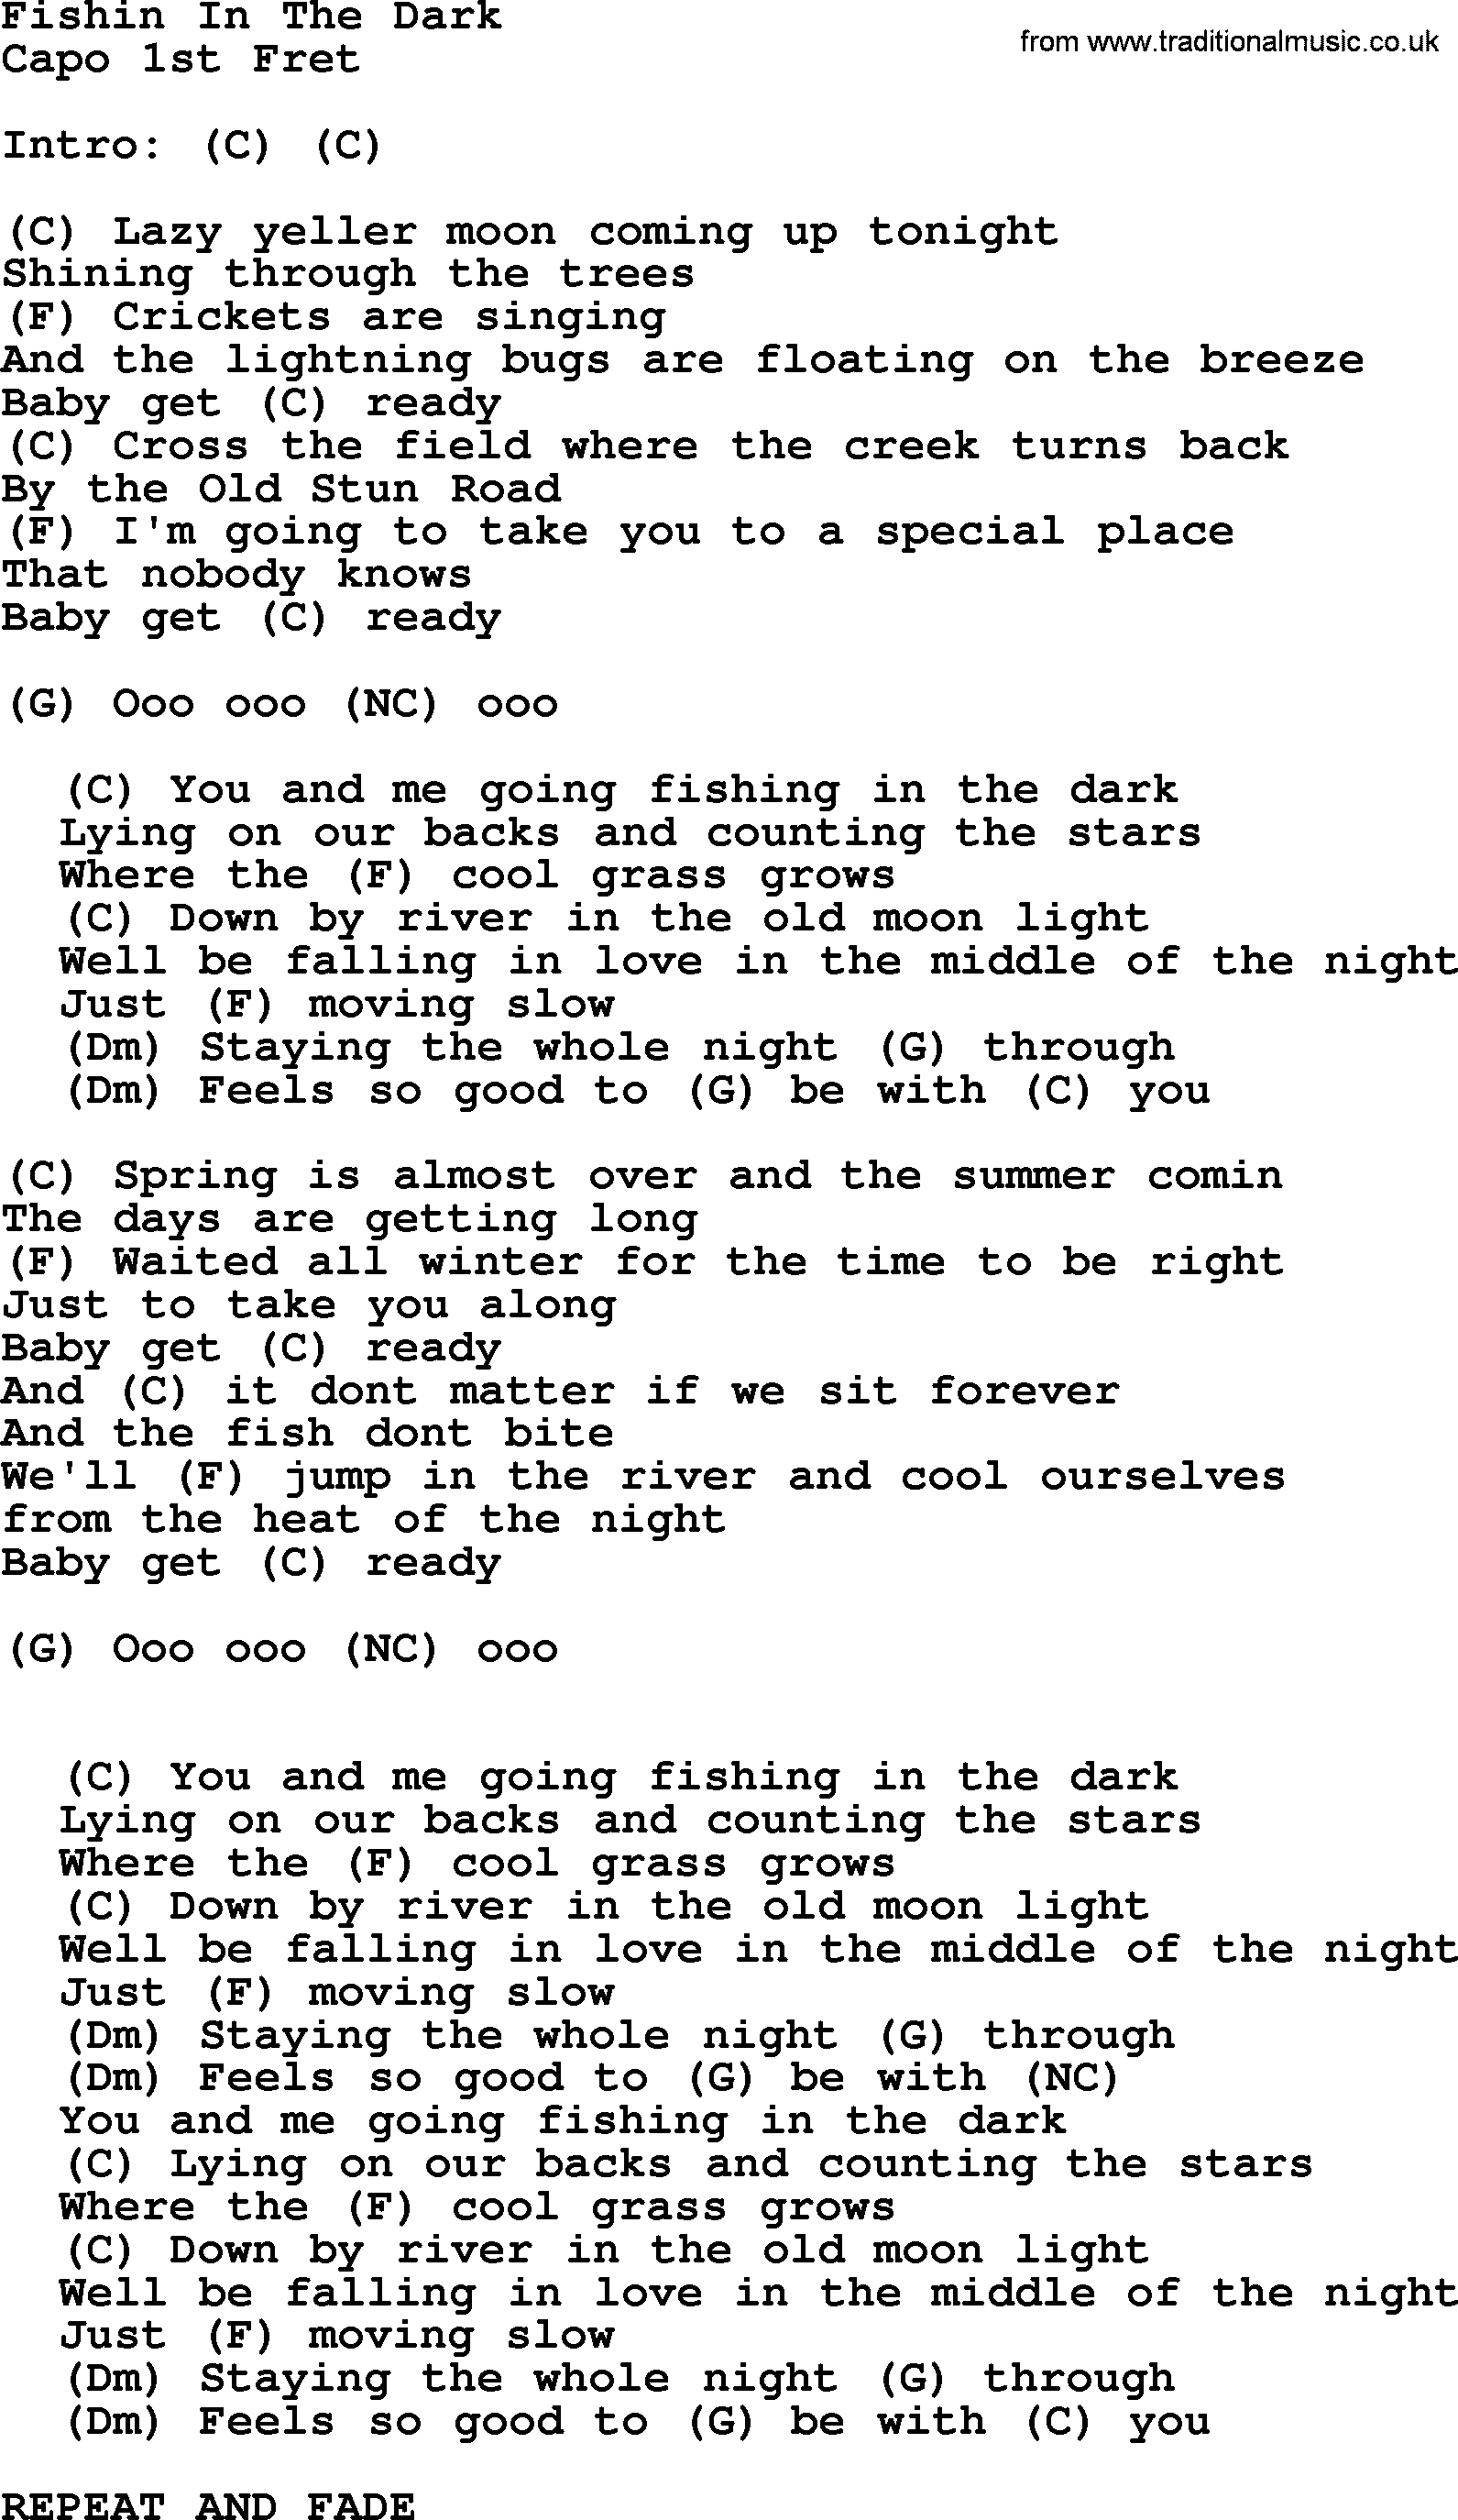 Garth Brooks song: Fishin In The Dark, lyrics and chords